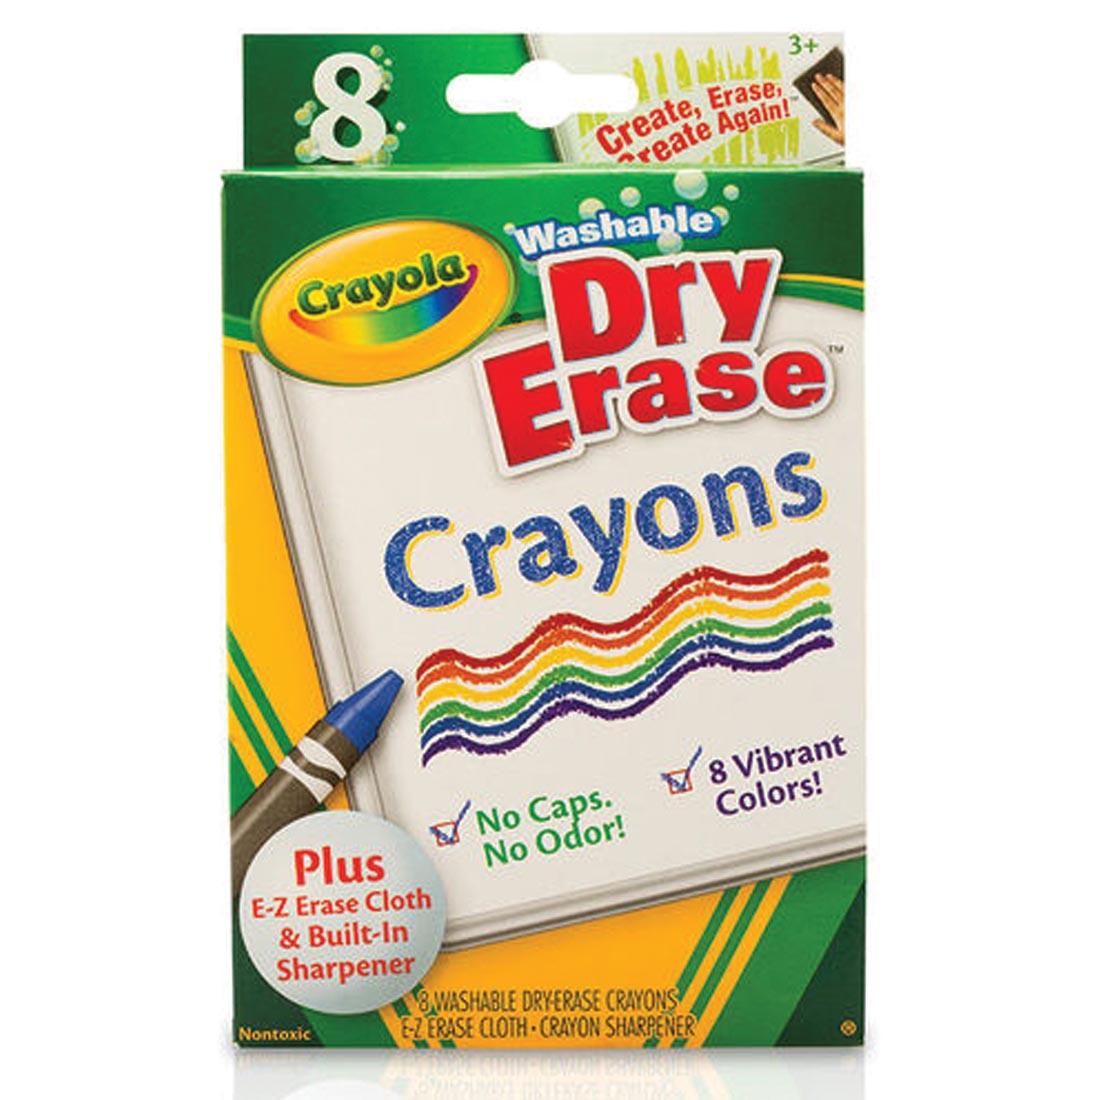 Package of Crayola Washable Dry Erase Crayons Original Colors